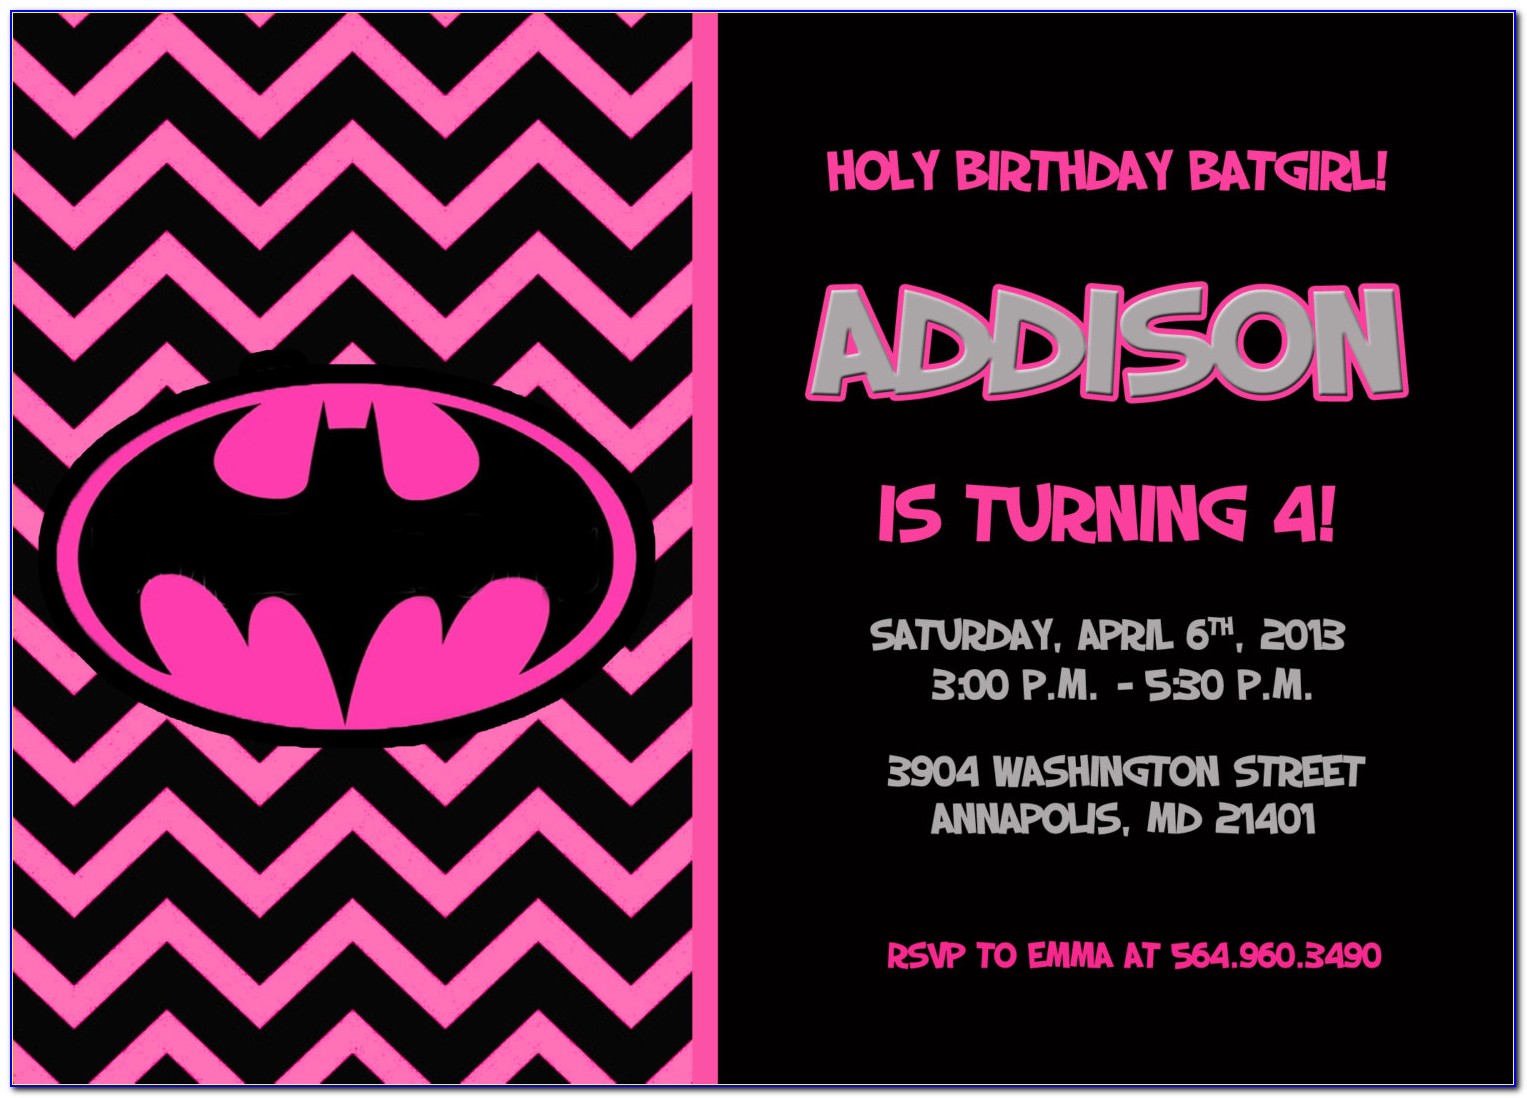 Batgirl Birthday Party Invitations Free